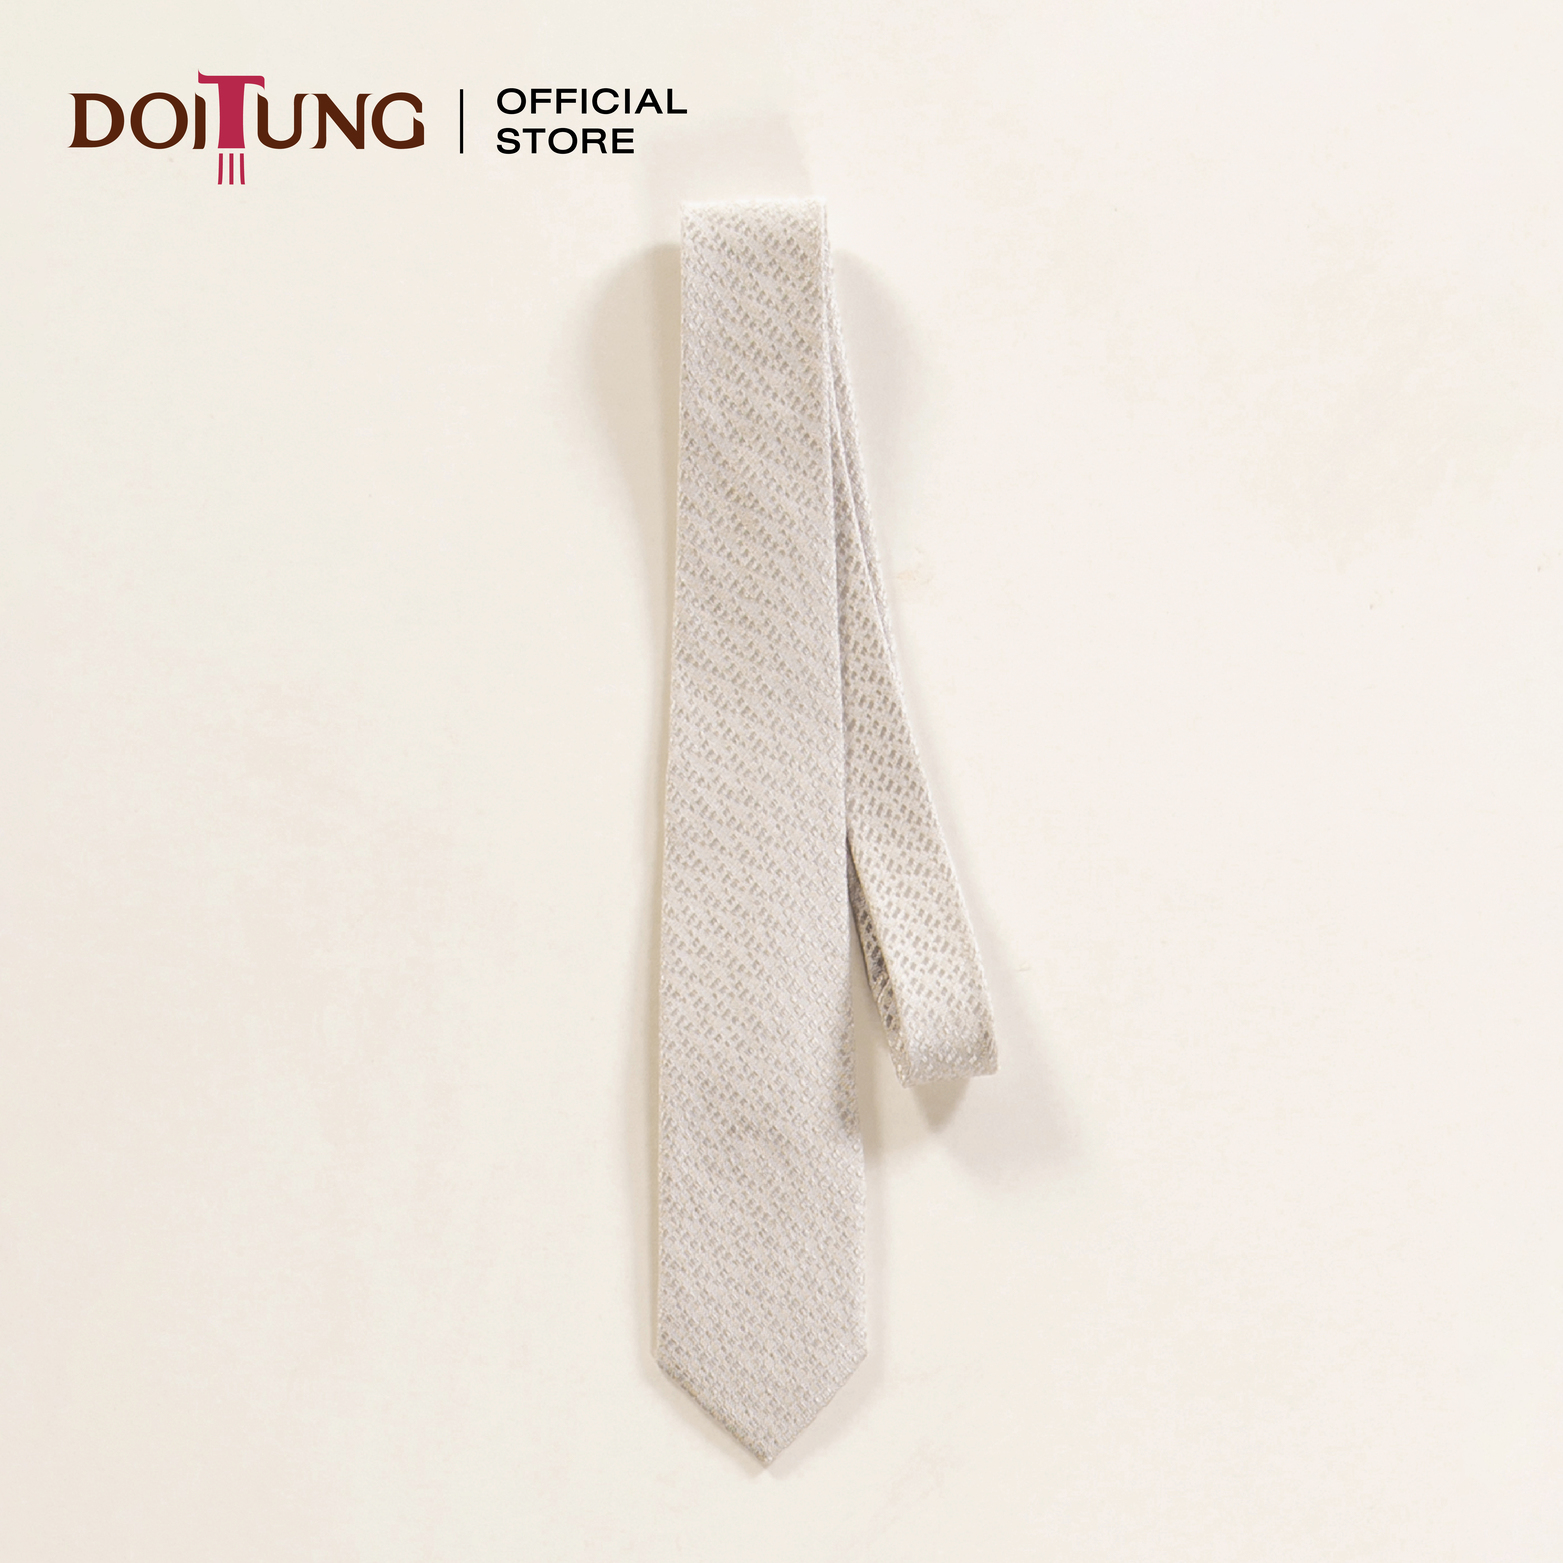 DoiTung Necktie - Gift set 2020 -Tiny Triangle (7.6x150 cm.) ชุดของขวัญ เนคไท ดอยตุง